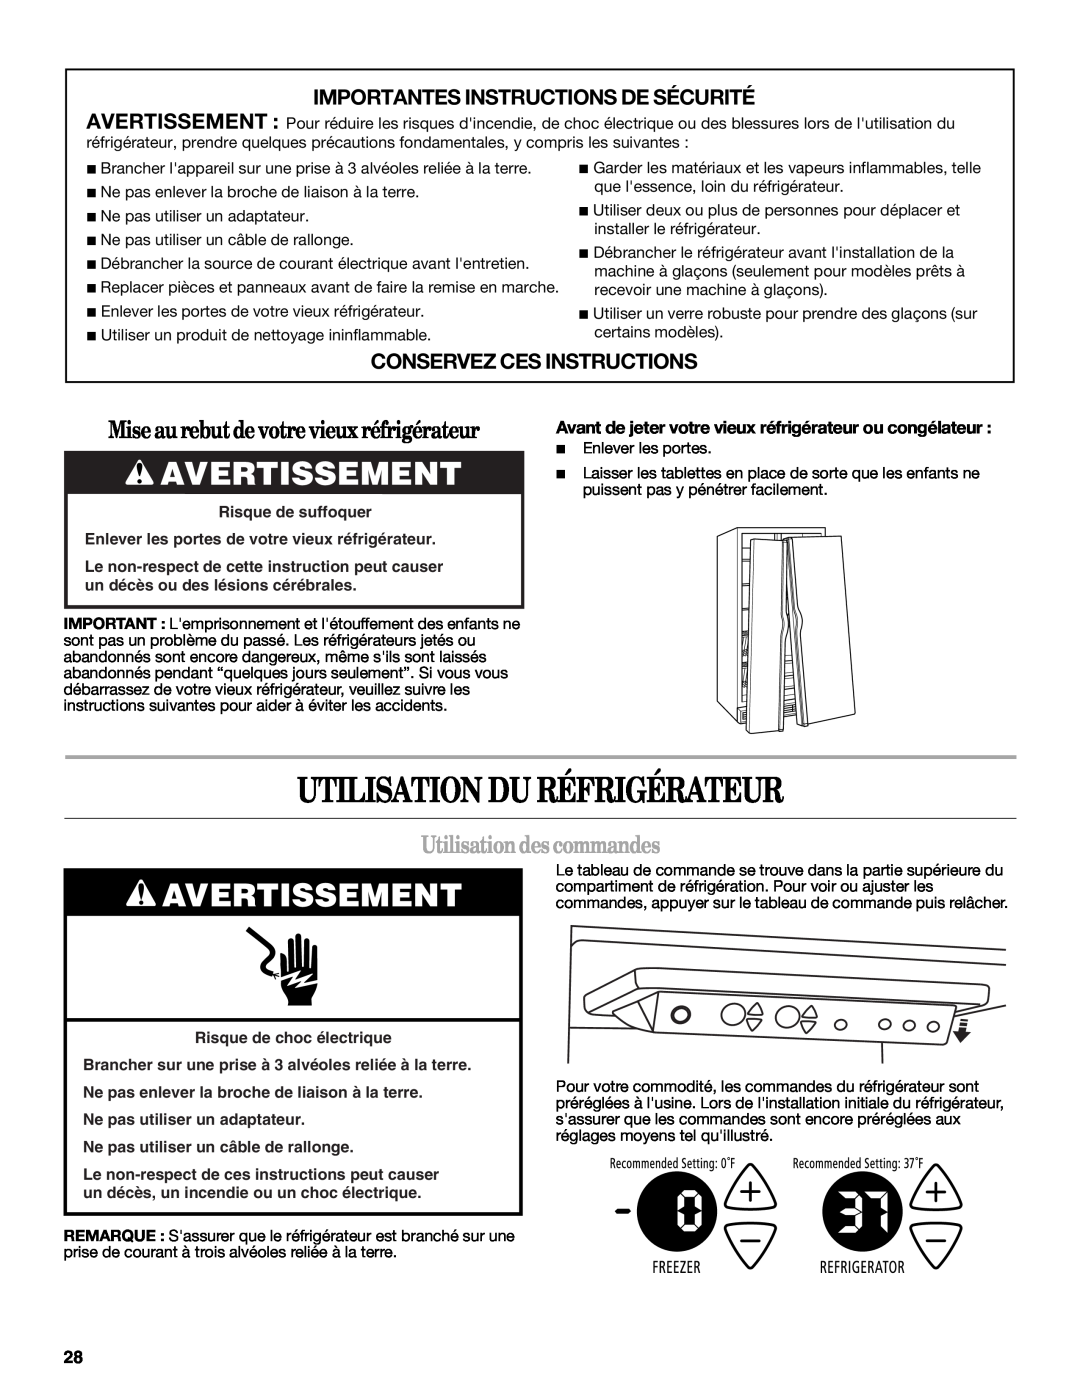 Whirlpool REFRIGERATOR USE & CARE GUIDE Utilisation Du Réfrigérateur, Avertissement, Miseau rebutdevotrevieuxréfrigérateur 